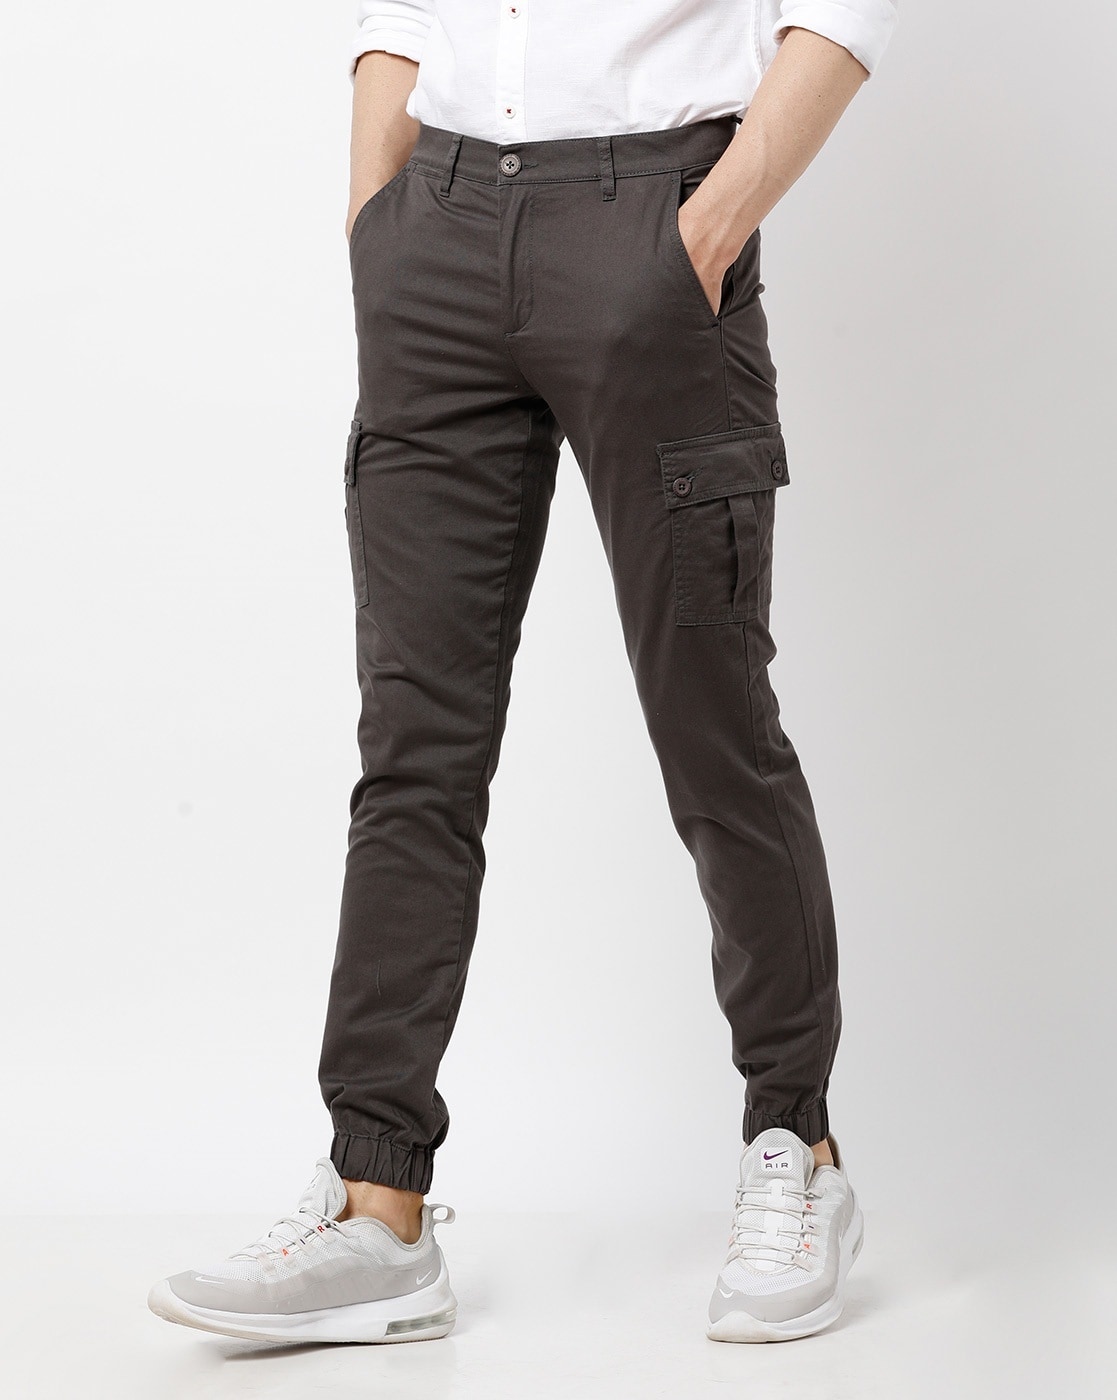 grey cargo  Buy cargo pants for men Online In India  DAKS NEO CLOTHING CO INDIA